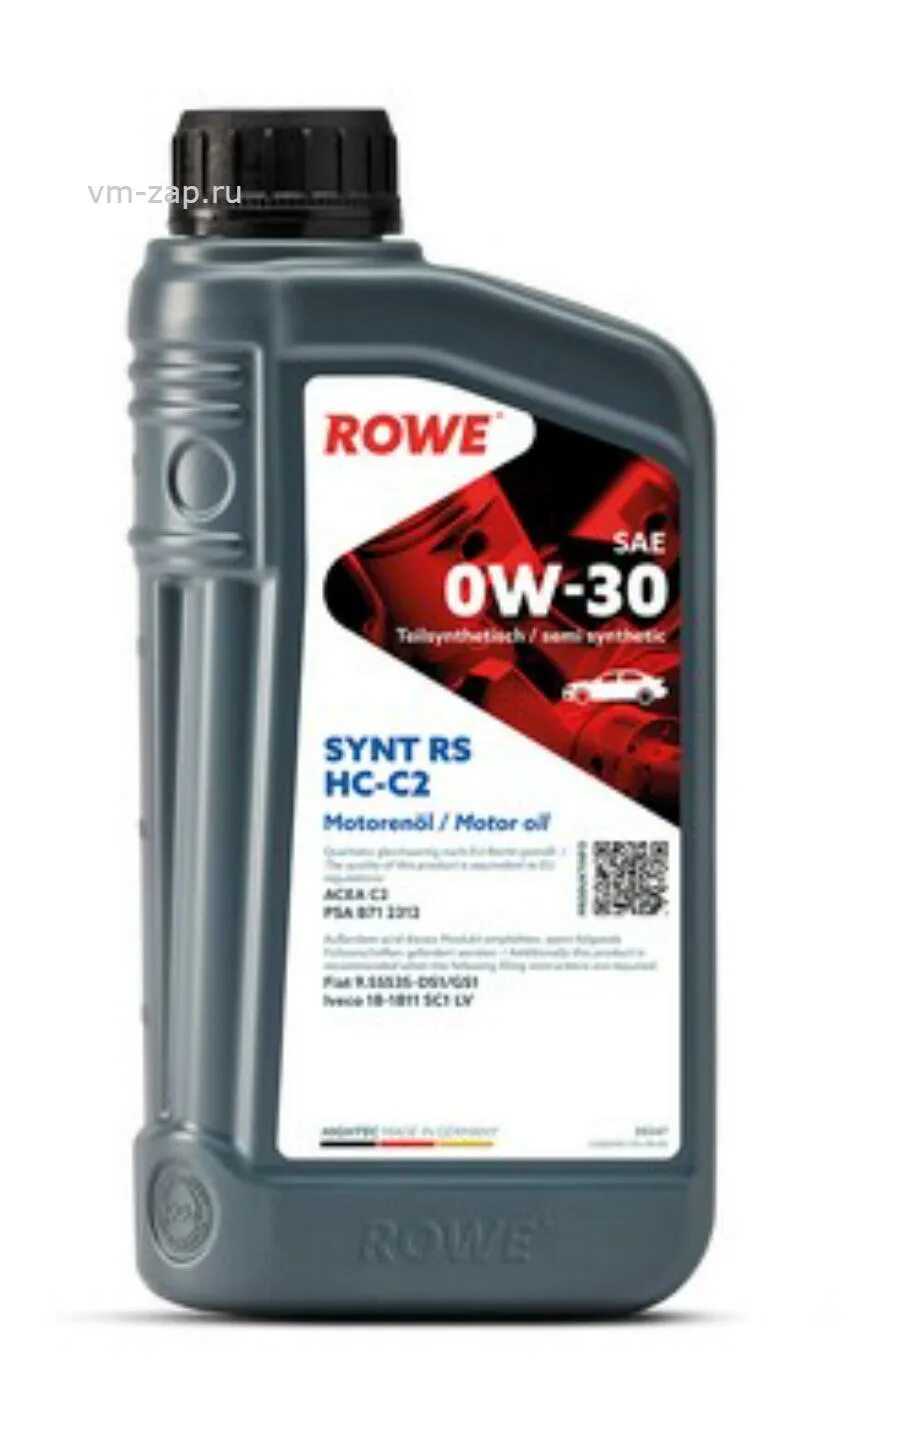 Rowe sae 5w 30. Rowe Multi Synt DPF SAE 5w30. Rowe Hightec Multi Synt DPF SAE 5w-30. Hightec Synt RS DLS SAE 5w-30. Rowe Hightec Synth RS 5w-40.